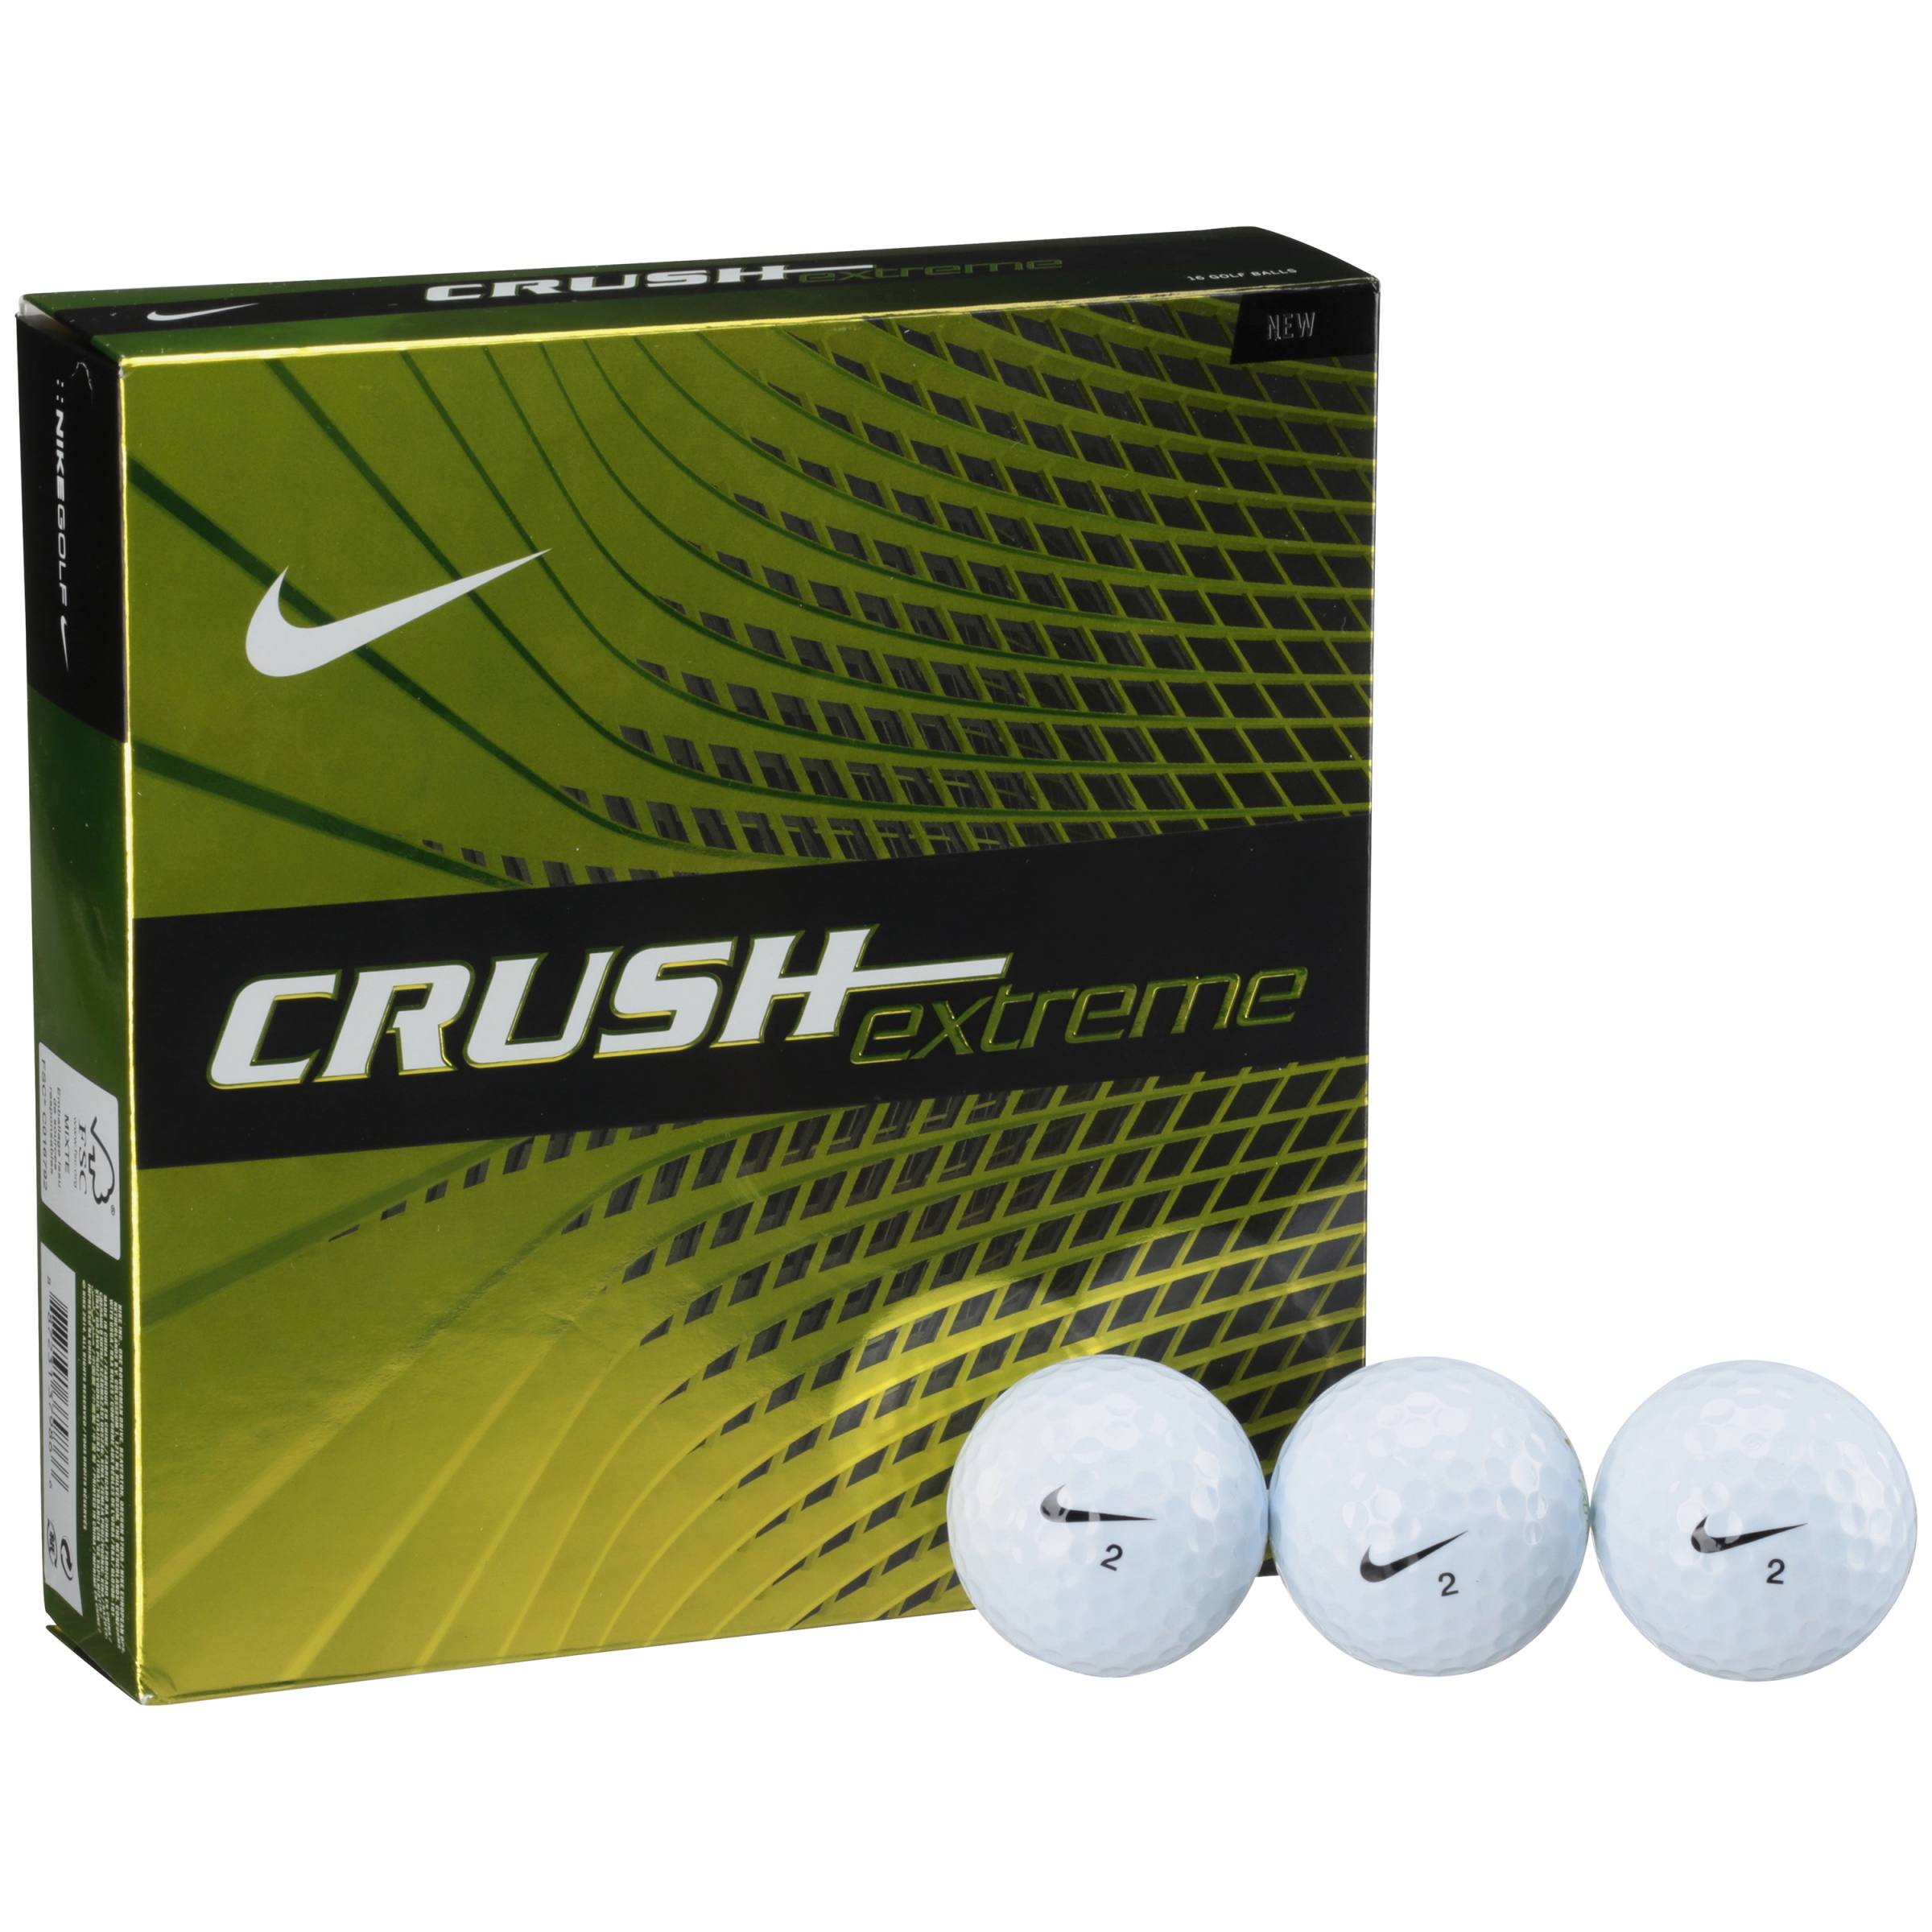 Nike Golf Crush Extreme Golf Balls, 12 Pack - image 1 of 4